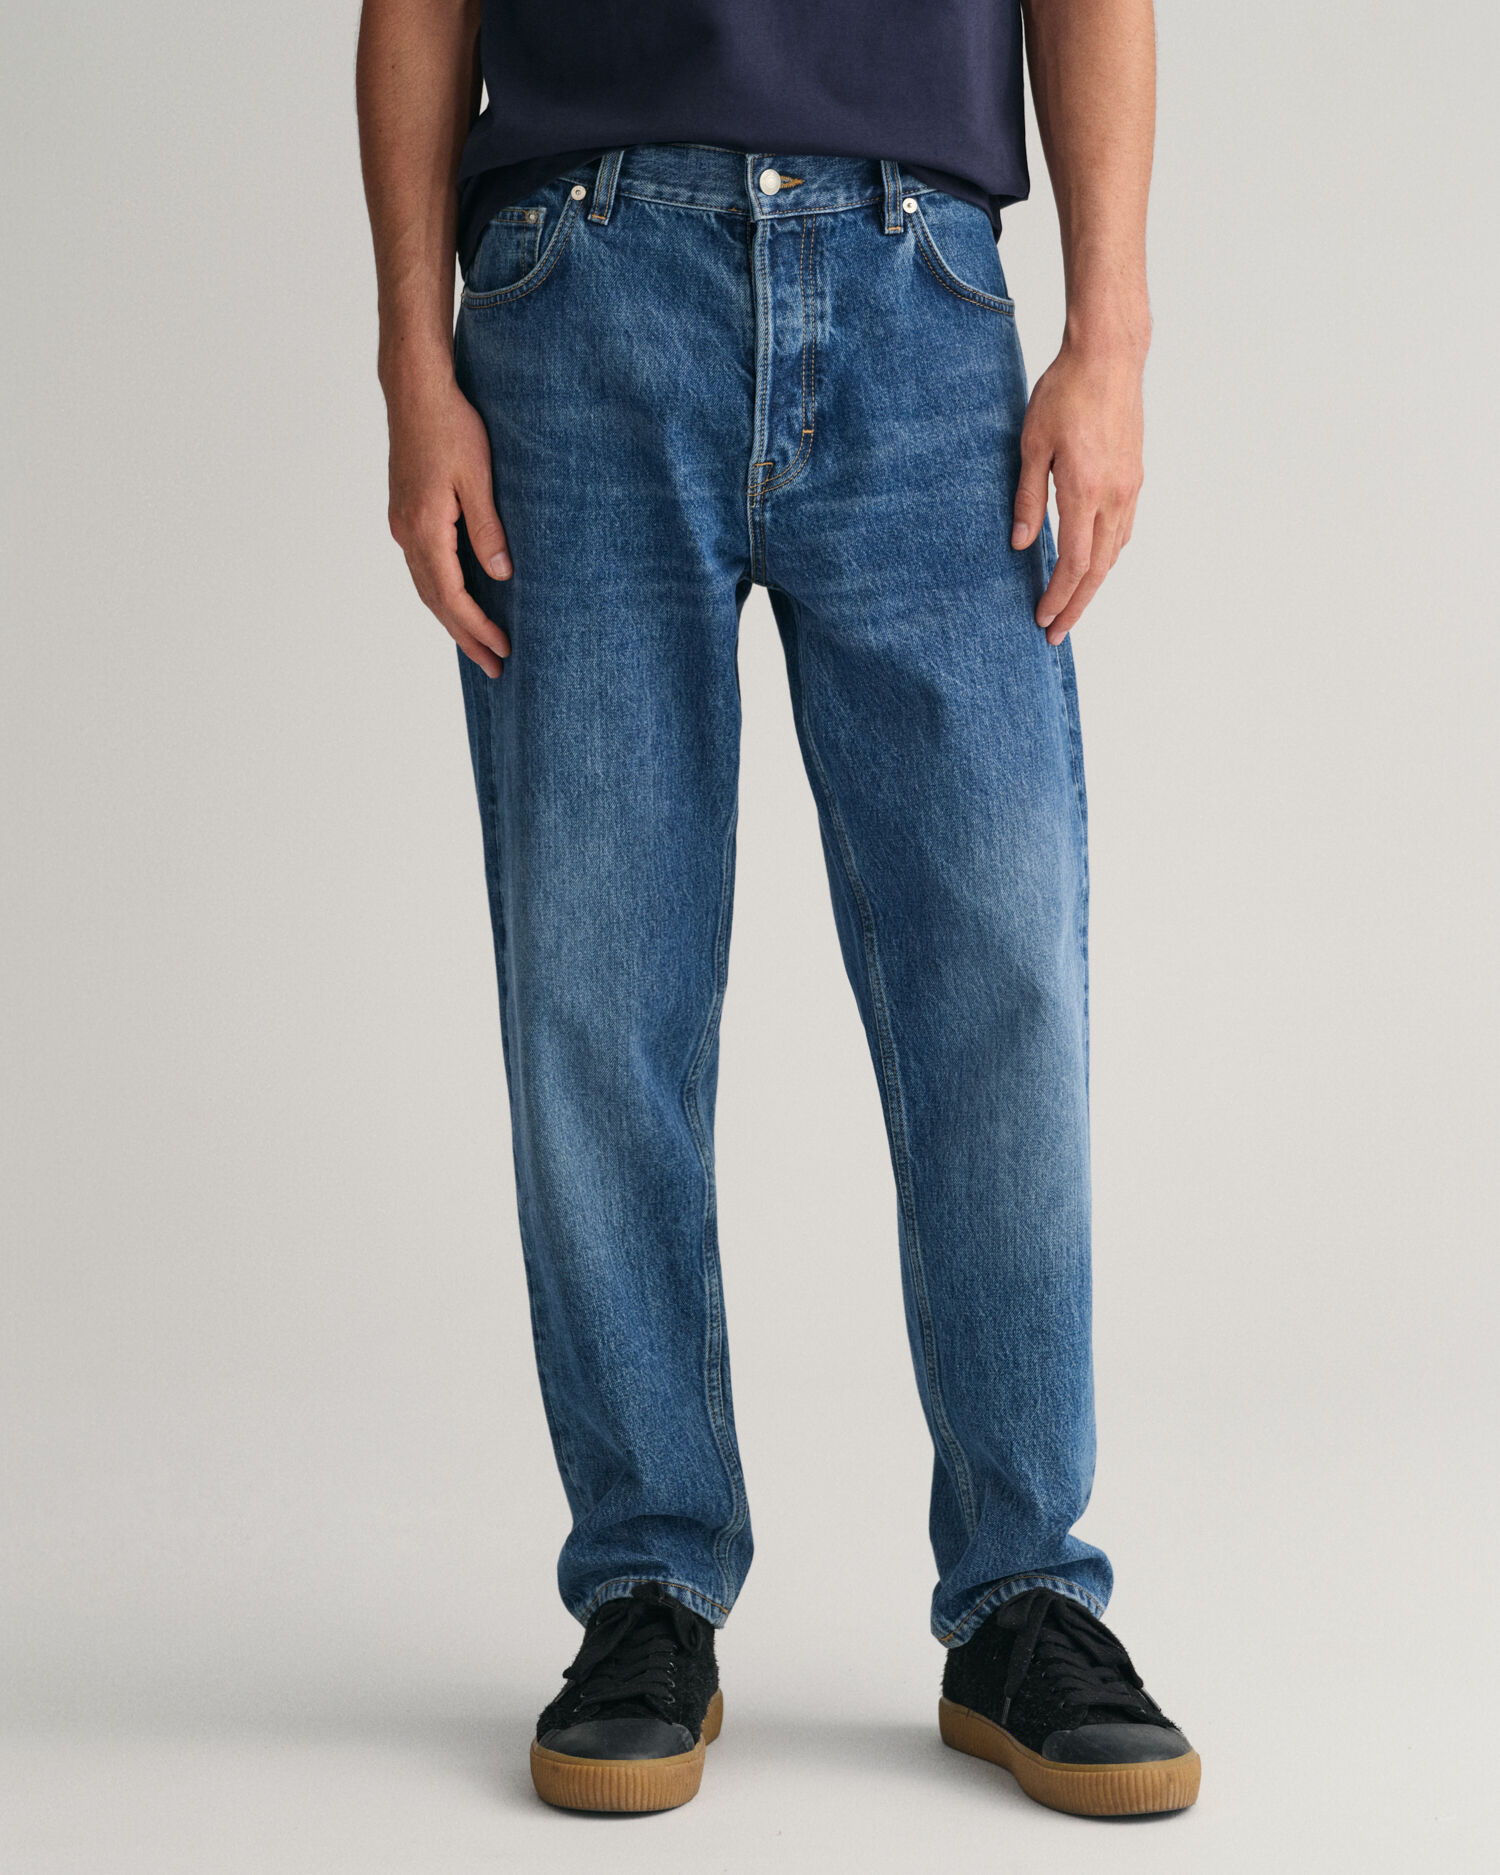 Judy Blue Relaxed Fit Jeans Raw Hem High Rise Style JB88191 Med Wash Sz  14w-24w | eBay